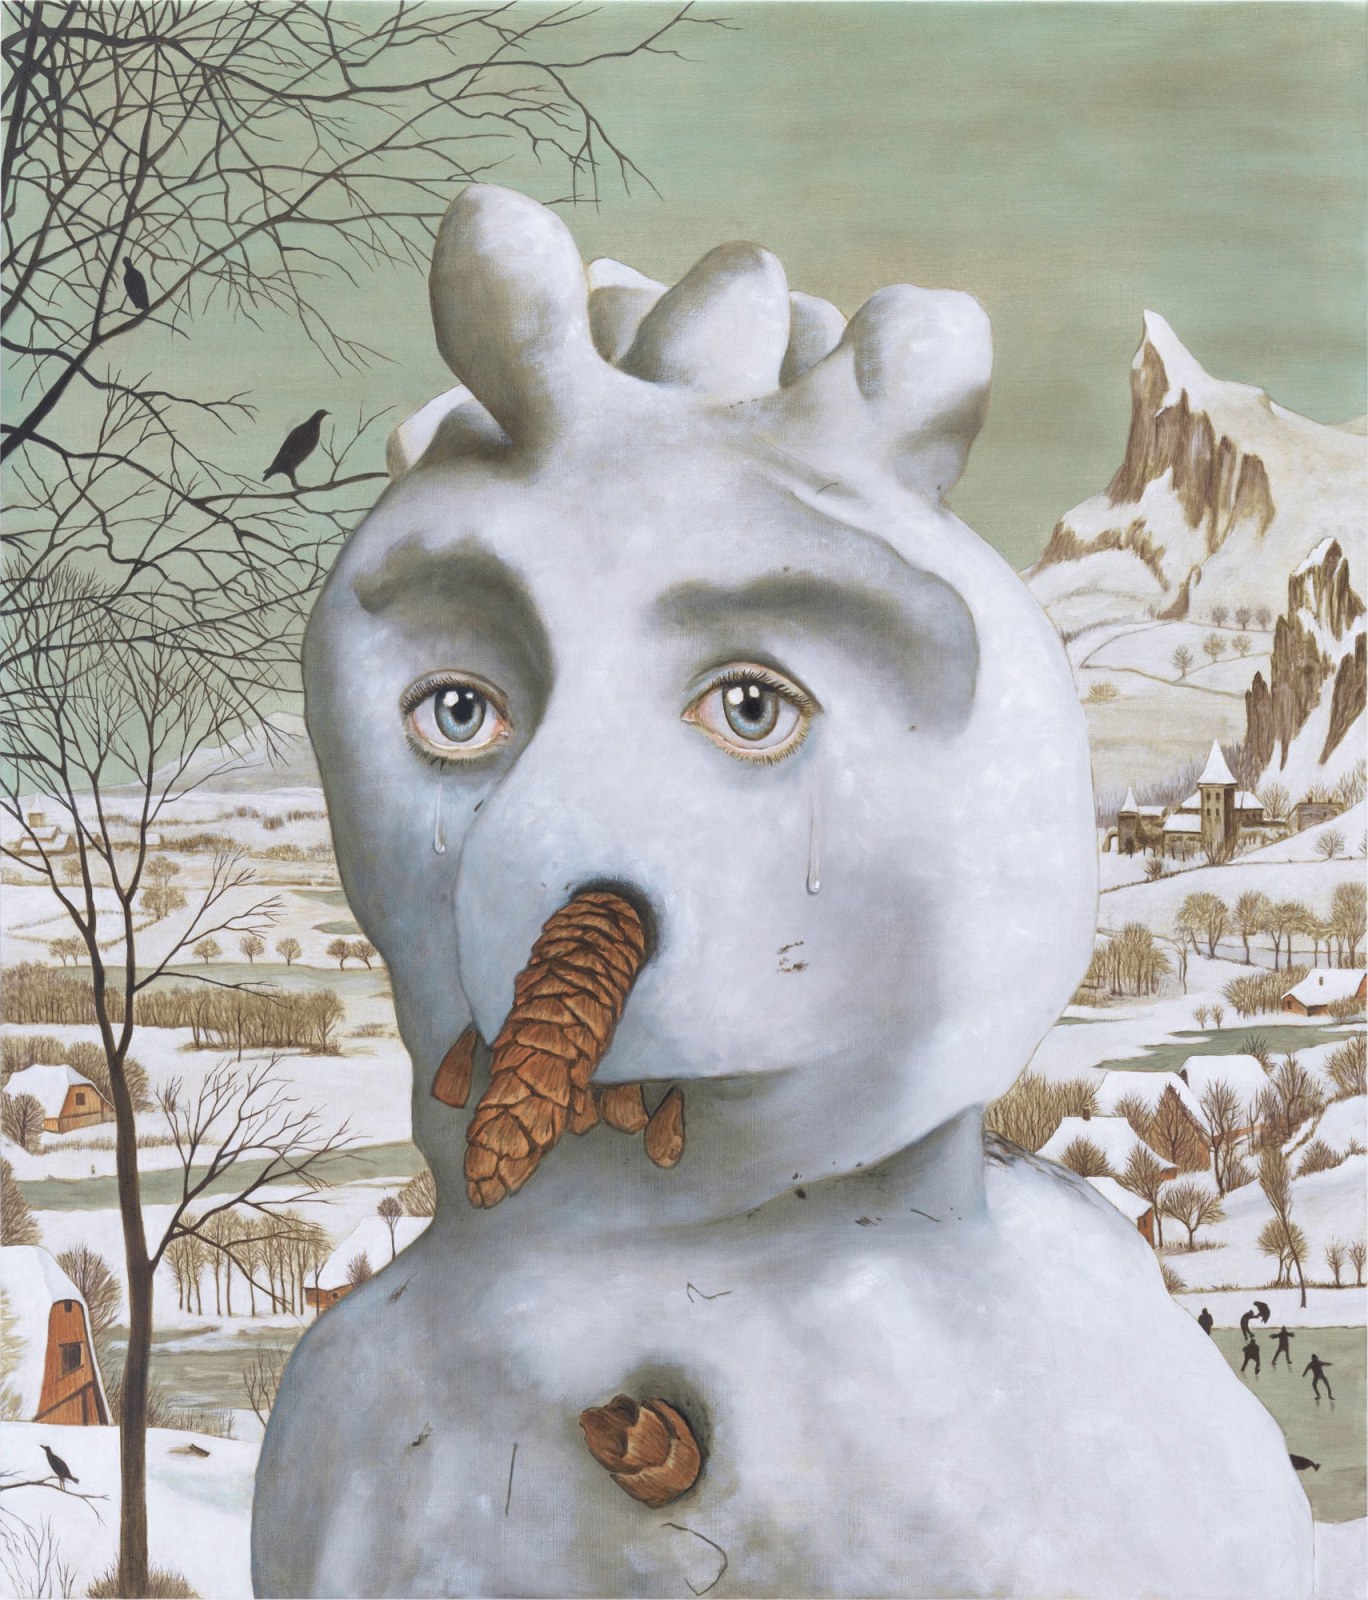 Snowman in Brueghel, 2016